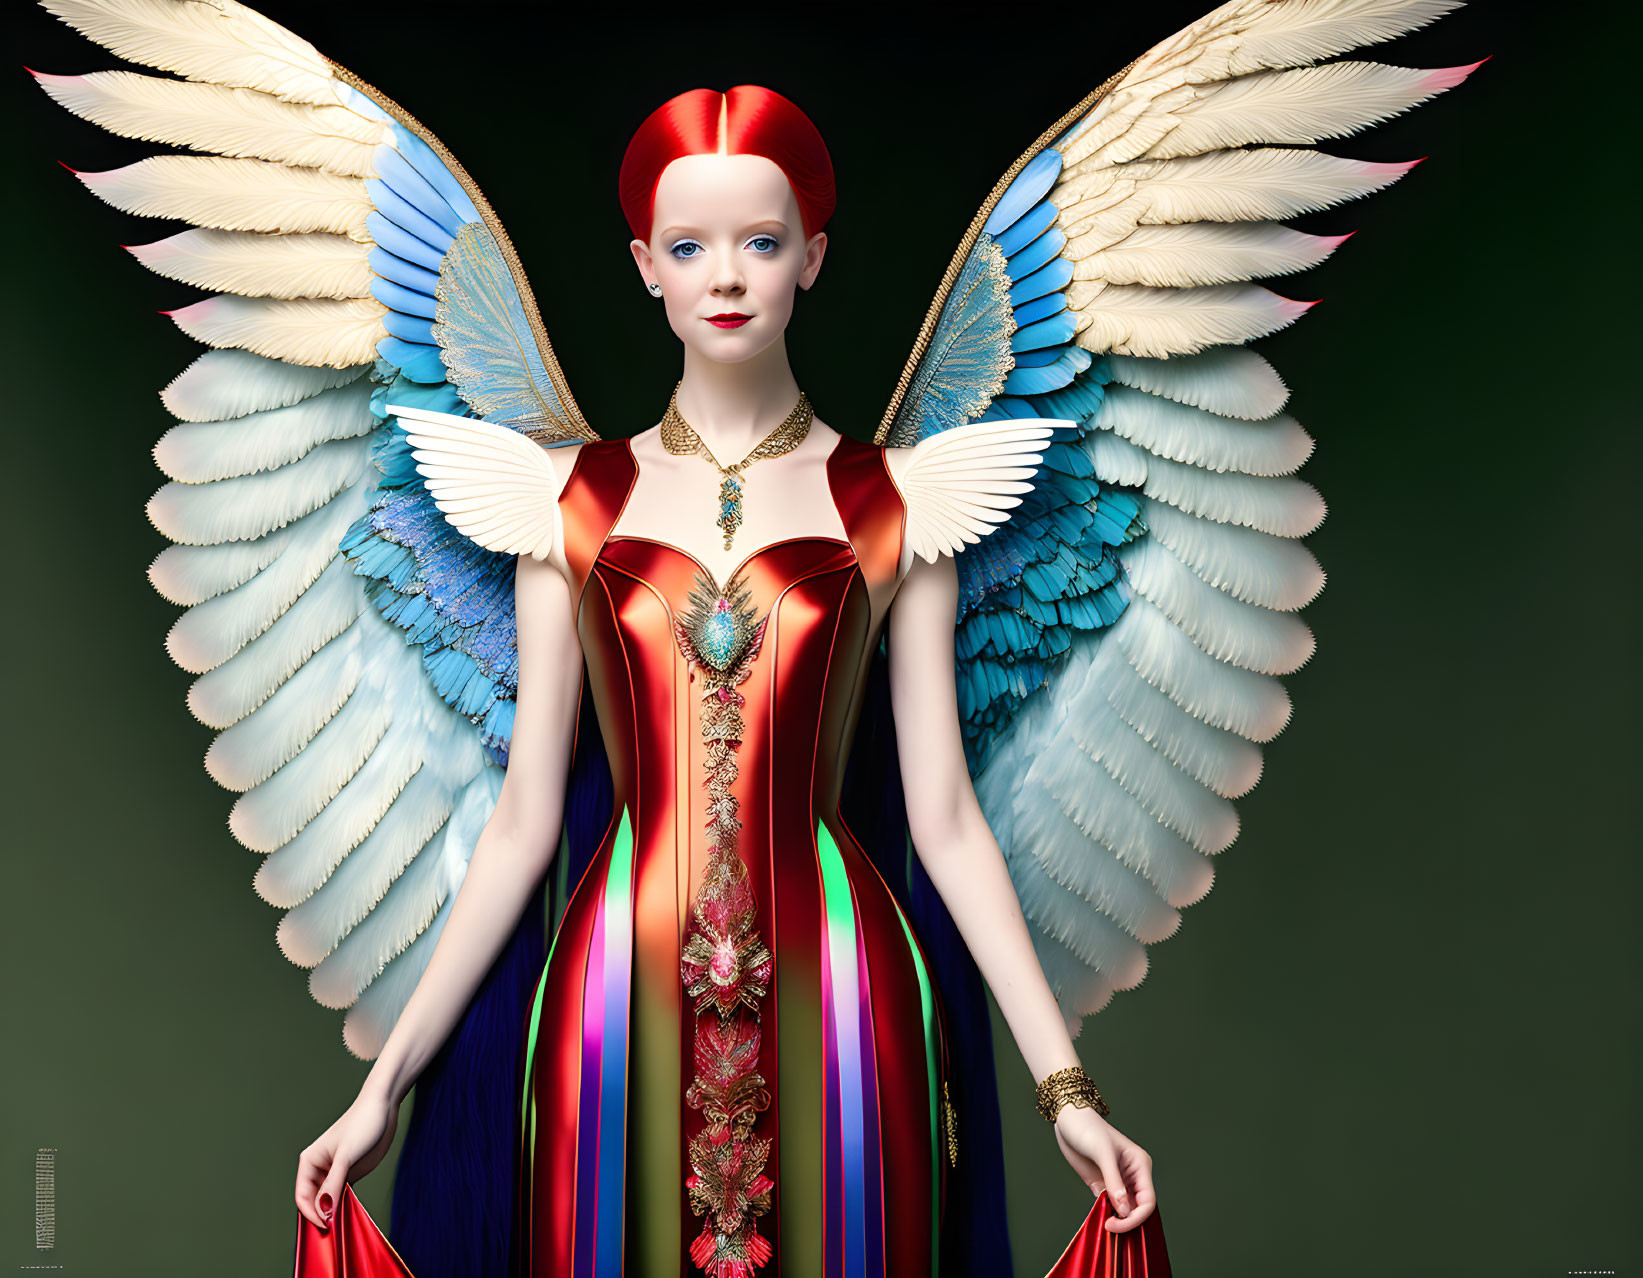 Digital artwork: Woman with bird-like wings, rainbow dress, red headpiece, gold jewelry